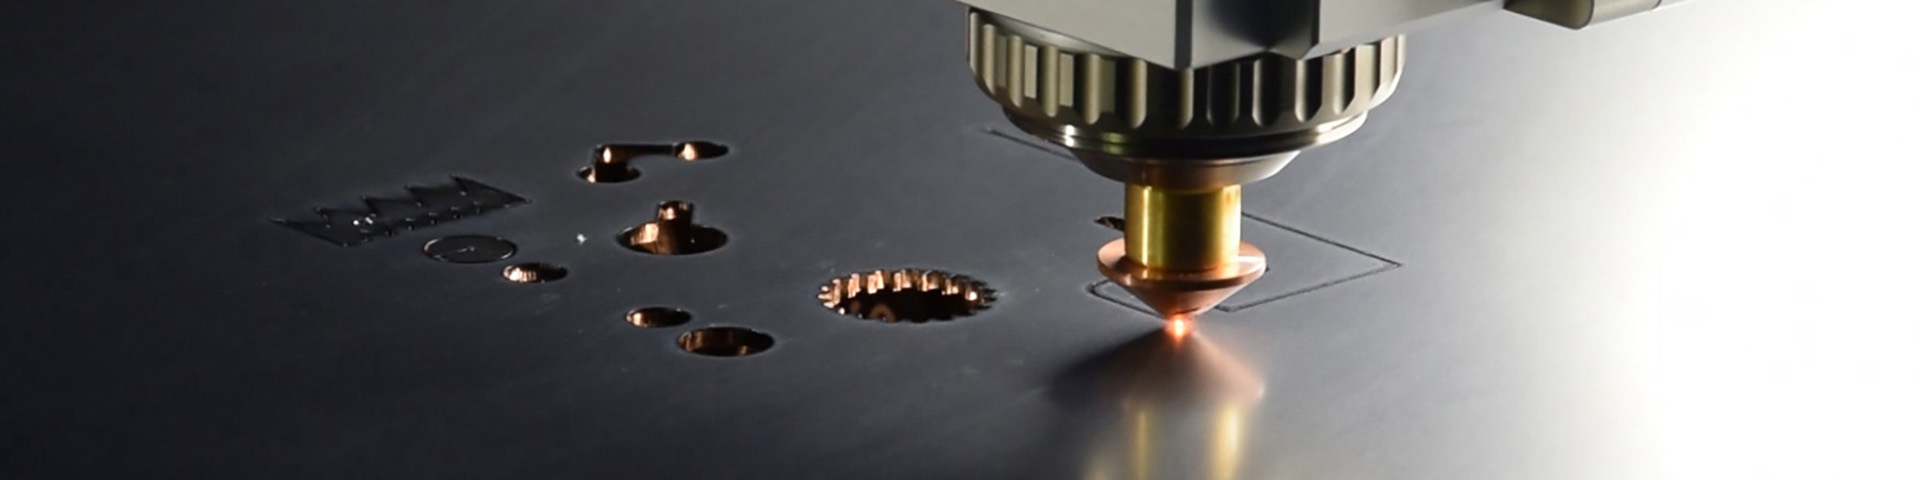 HRPFC-Fiber Laser Cutting Machine For Pipe